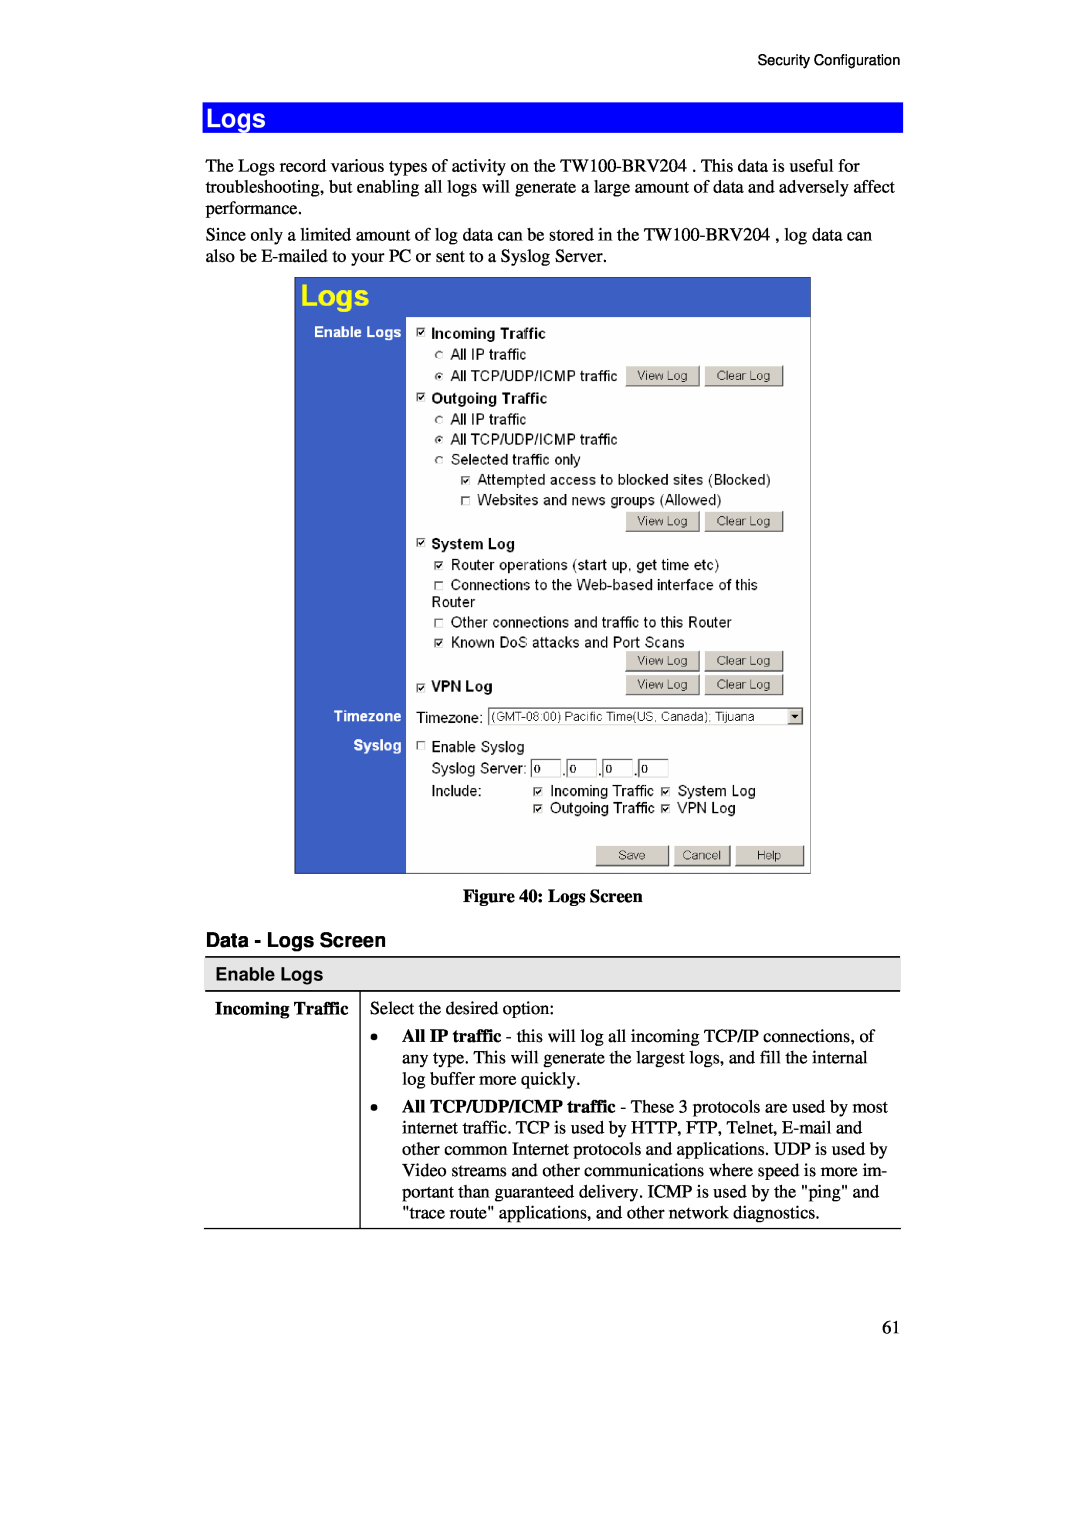 TRENDnet BRV204 manual Data - Logs Screen, Enable Logs 